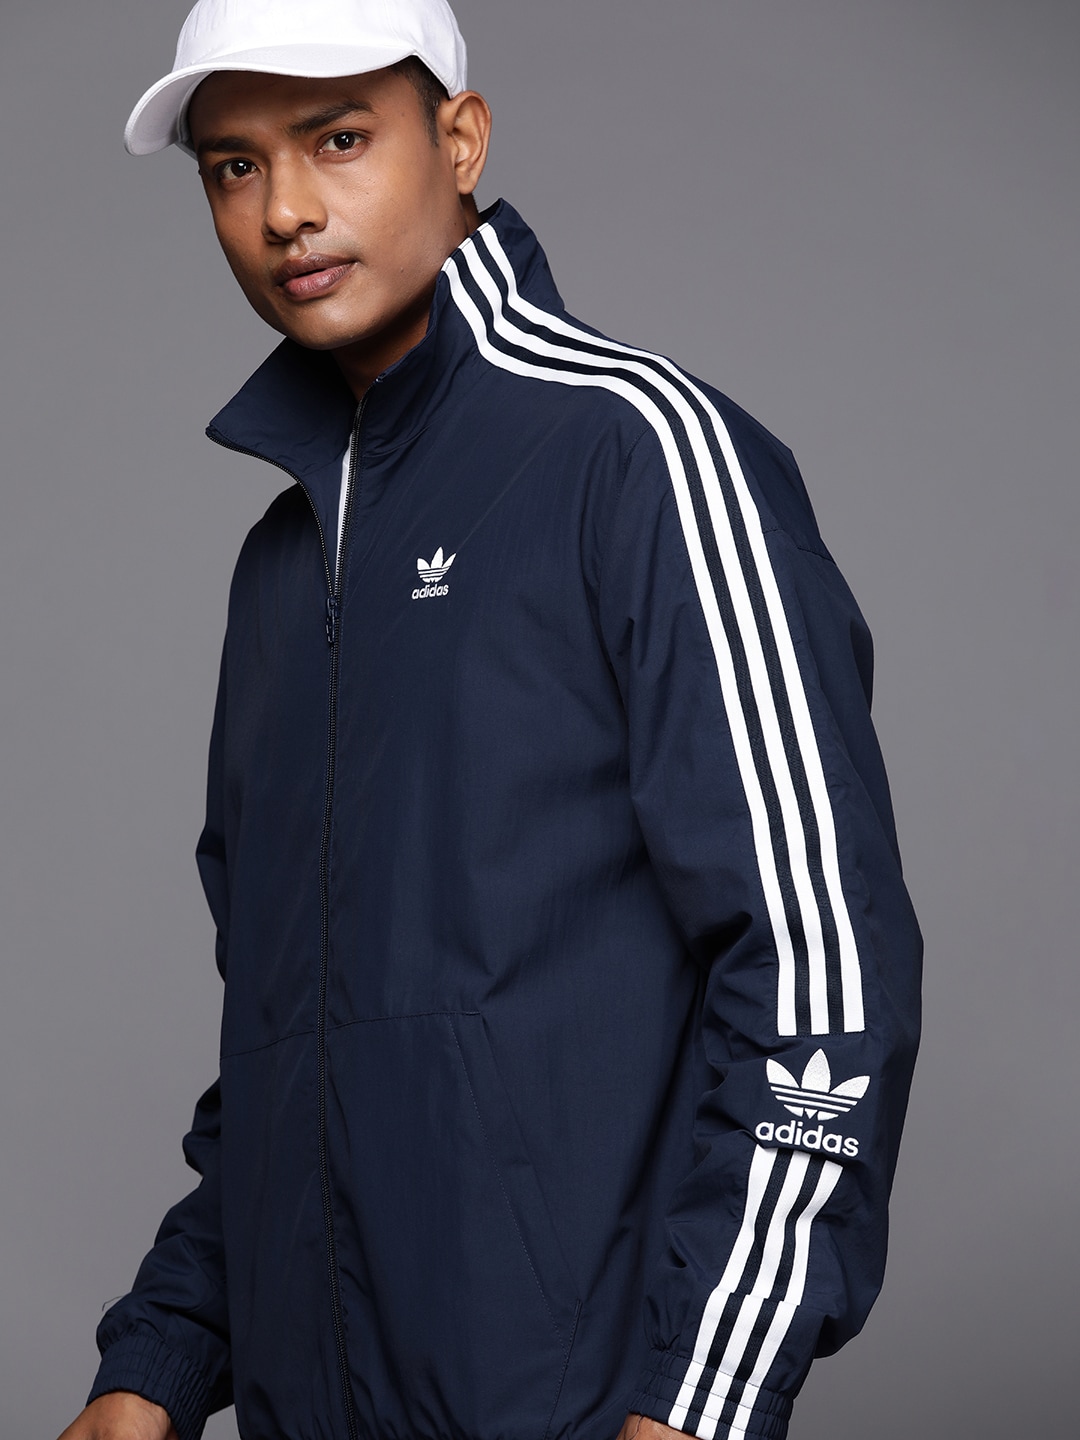 Buy India In Adidas Originals Online Jackets